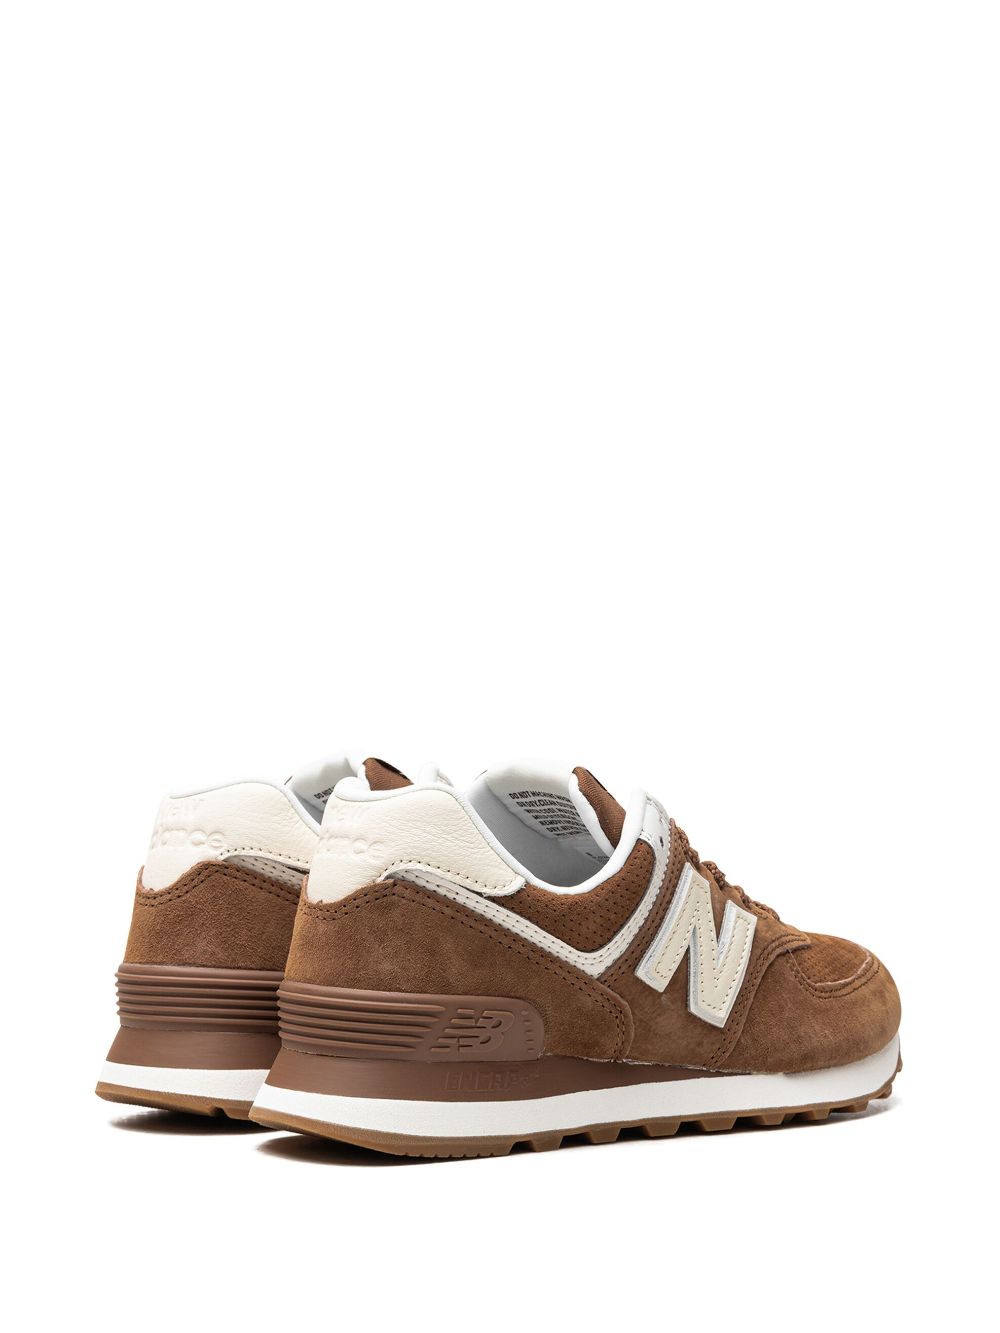 New Balance 574 "True Brown" sneakers Bruin